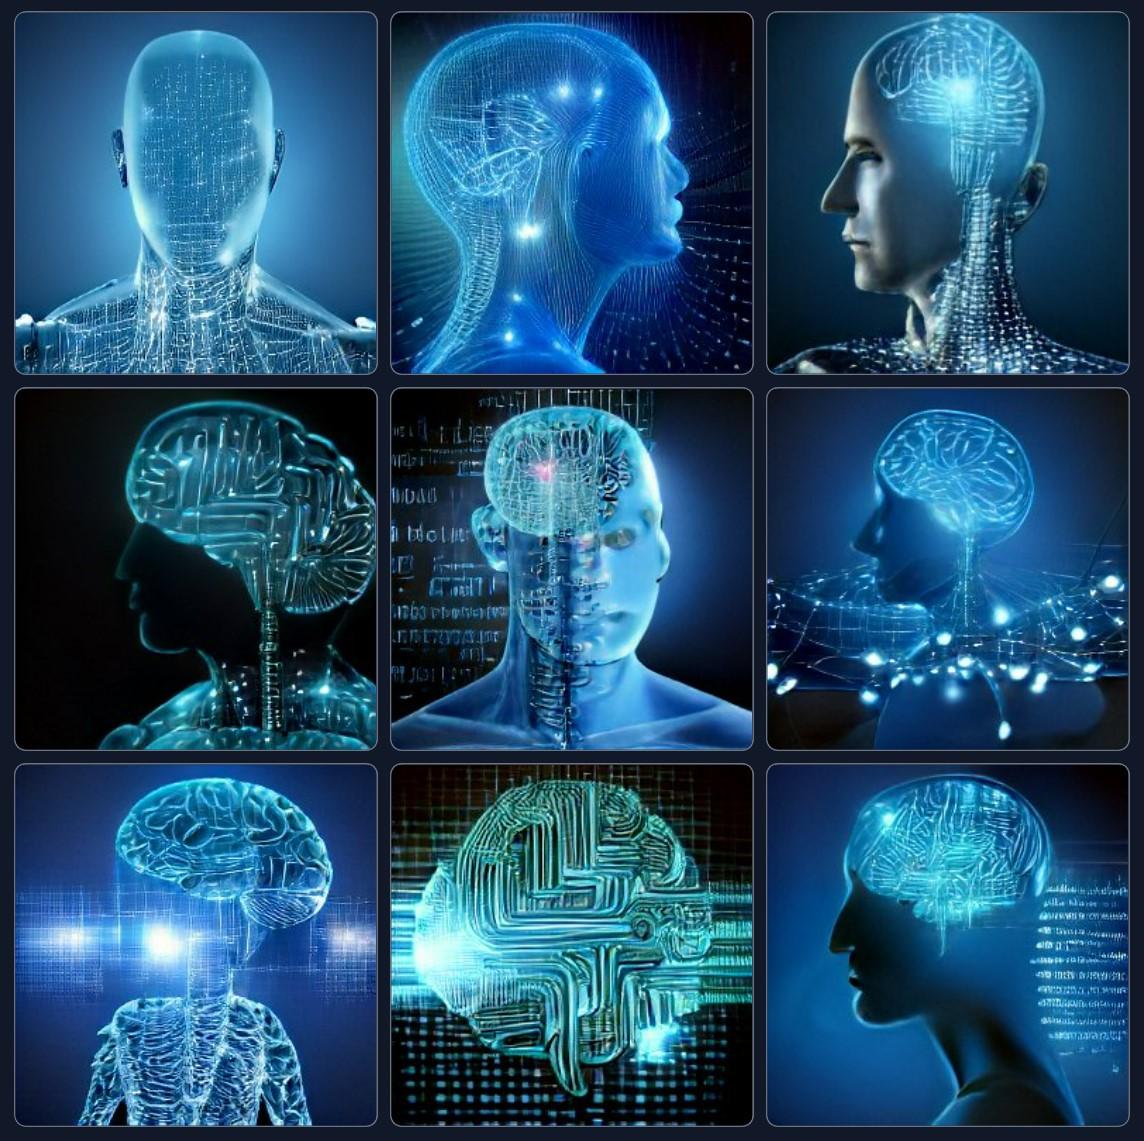 L'intelligence artificielle Craiyon a illustré la phrase "a human being driven by Artificial Intelligence", soit "un être humain mû par l'Intelligence Artificielle", 3 novembre 2022. [www.craiyon.com - AI model drawing images from any prompt!]